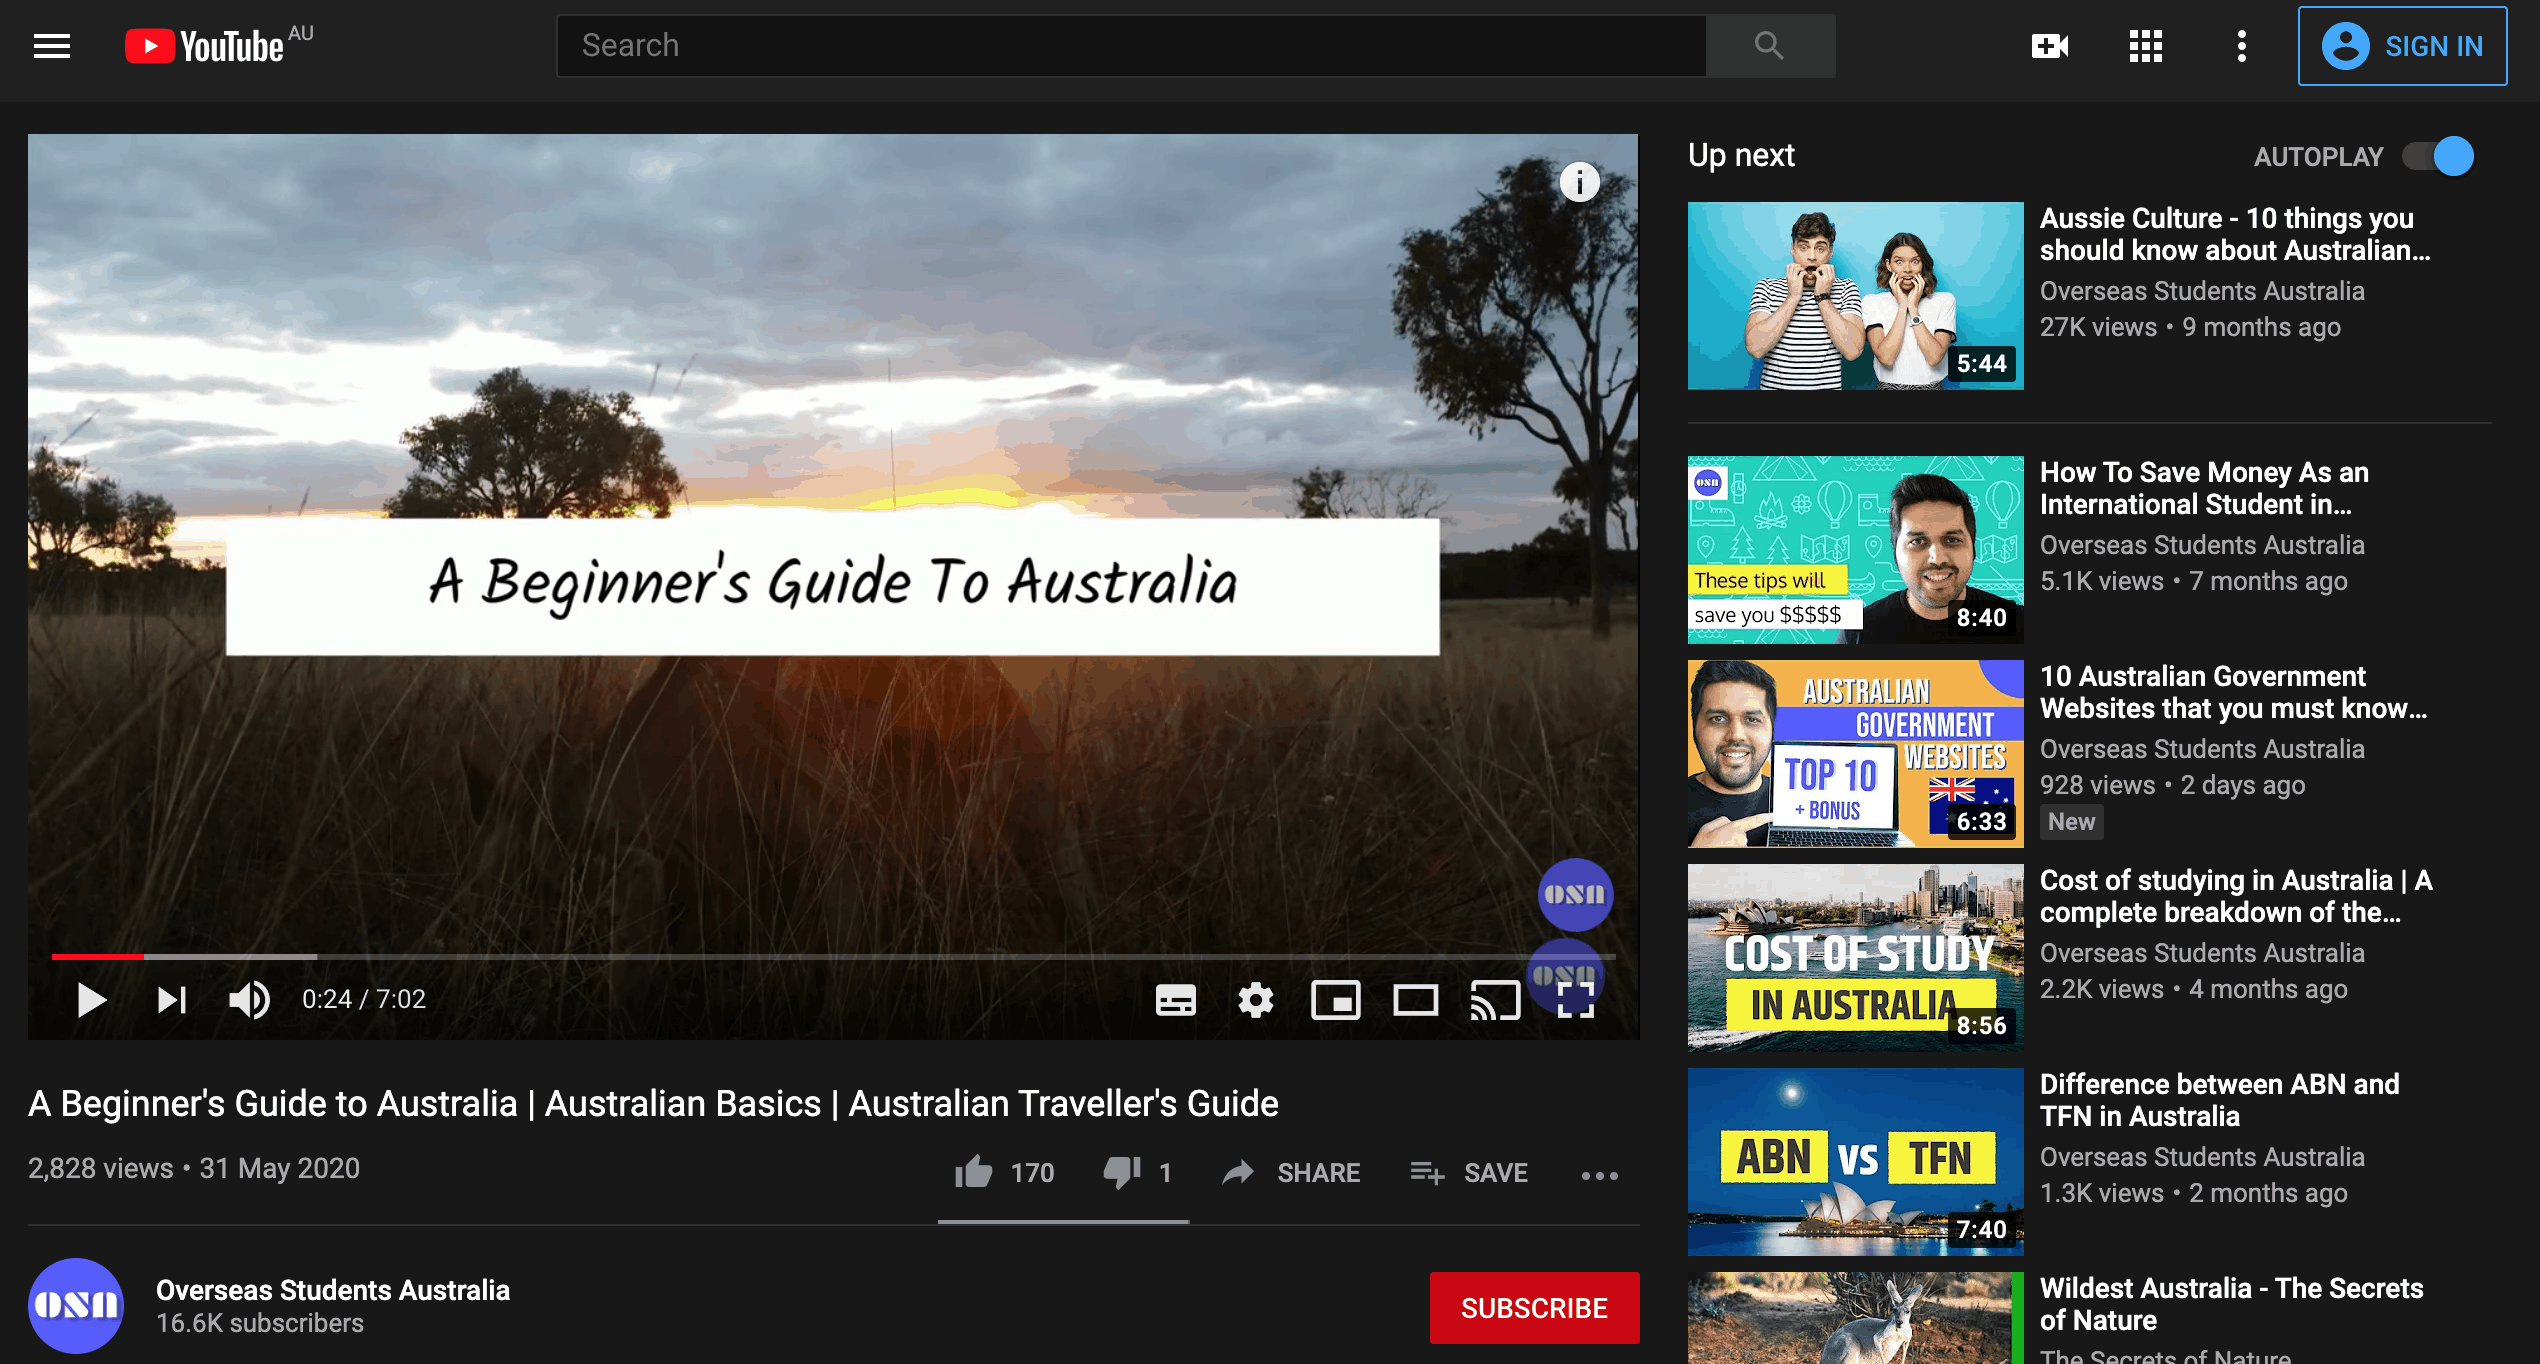 overseas students australia video ads 1